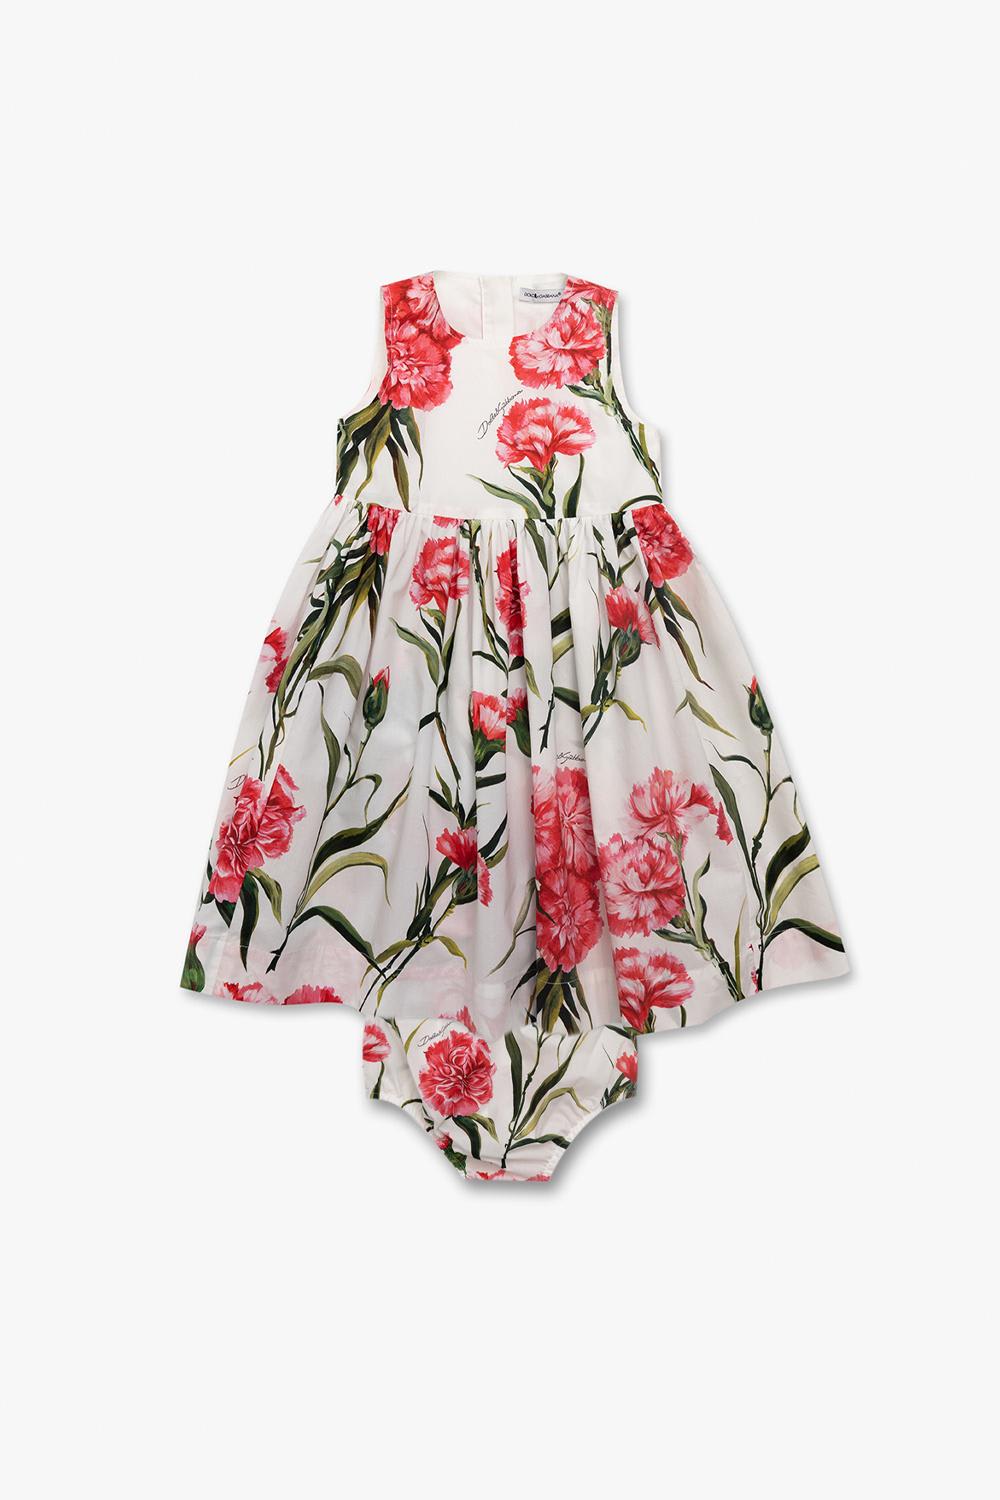 Dolce & Gabbana Kids Floral Dress